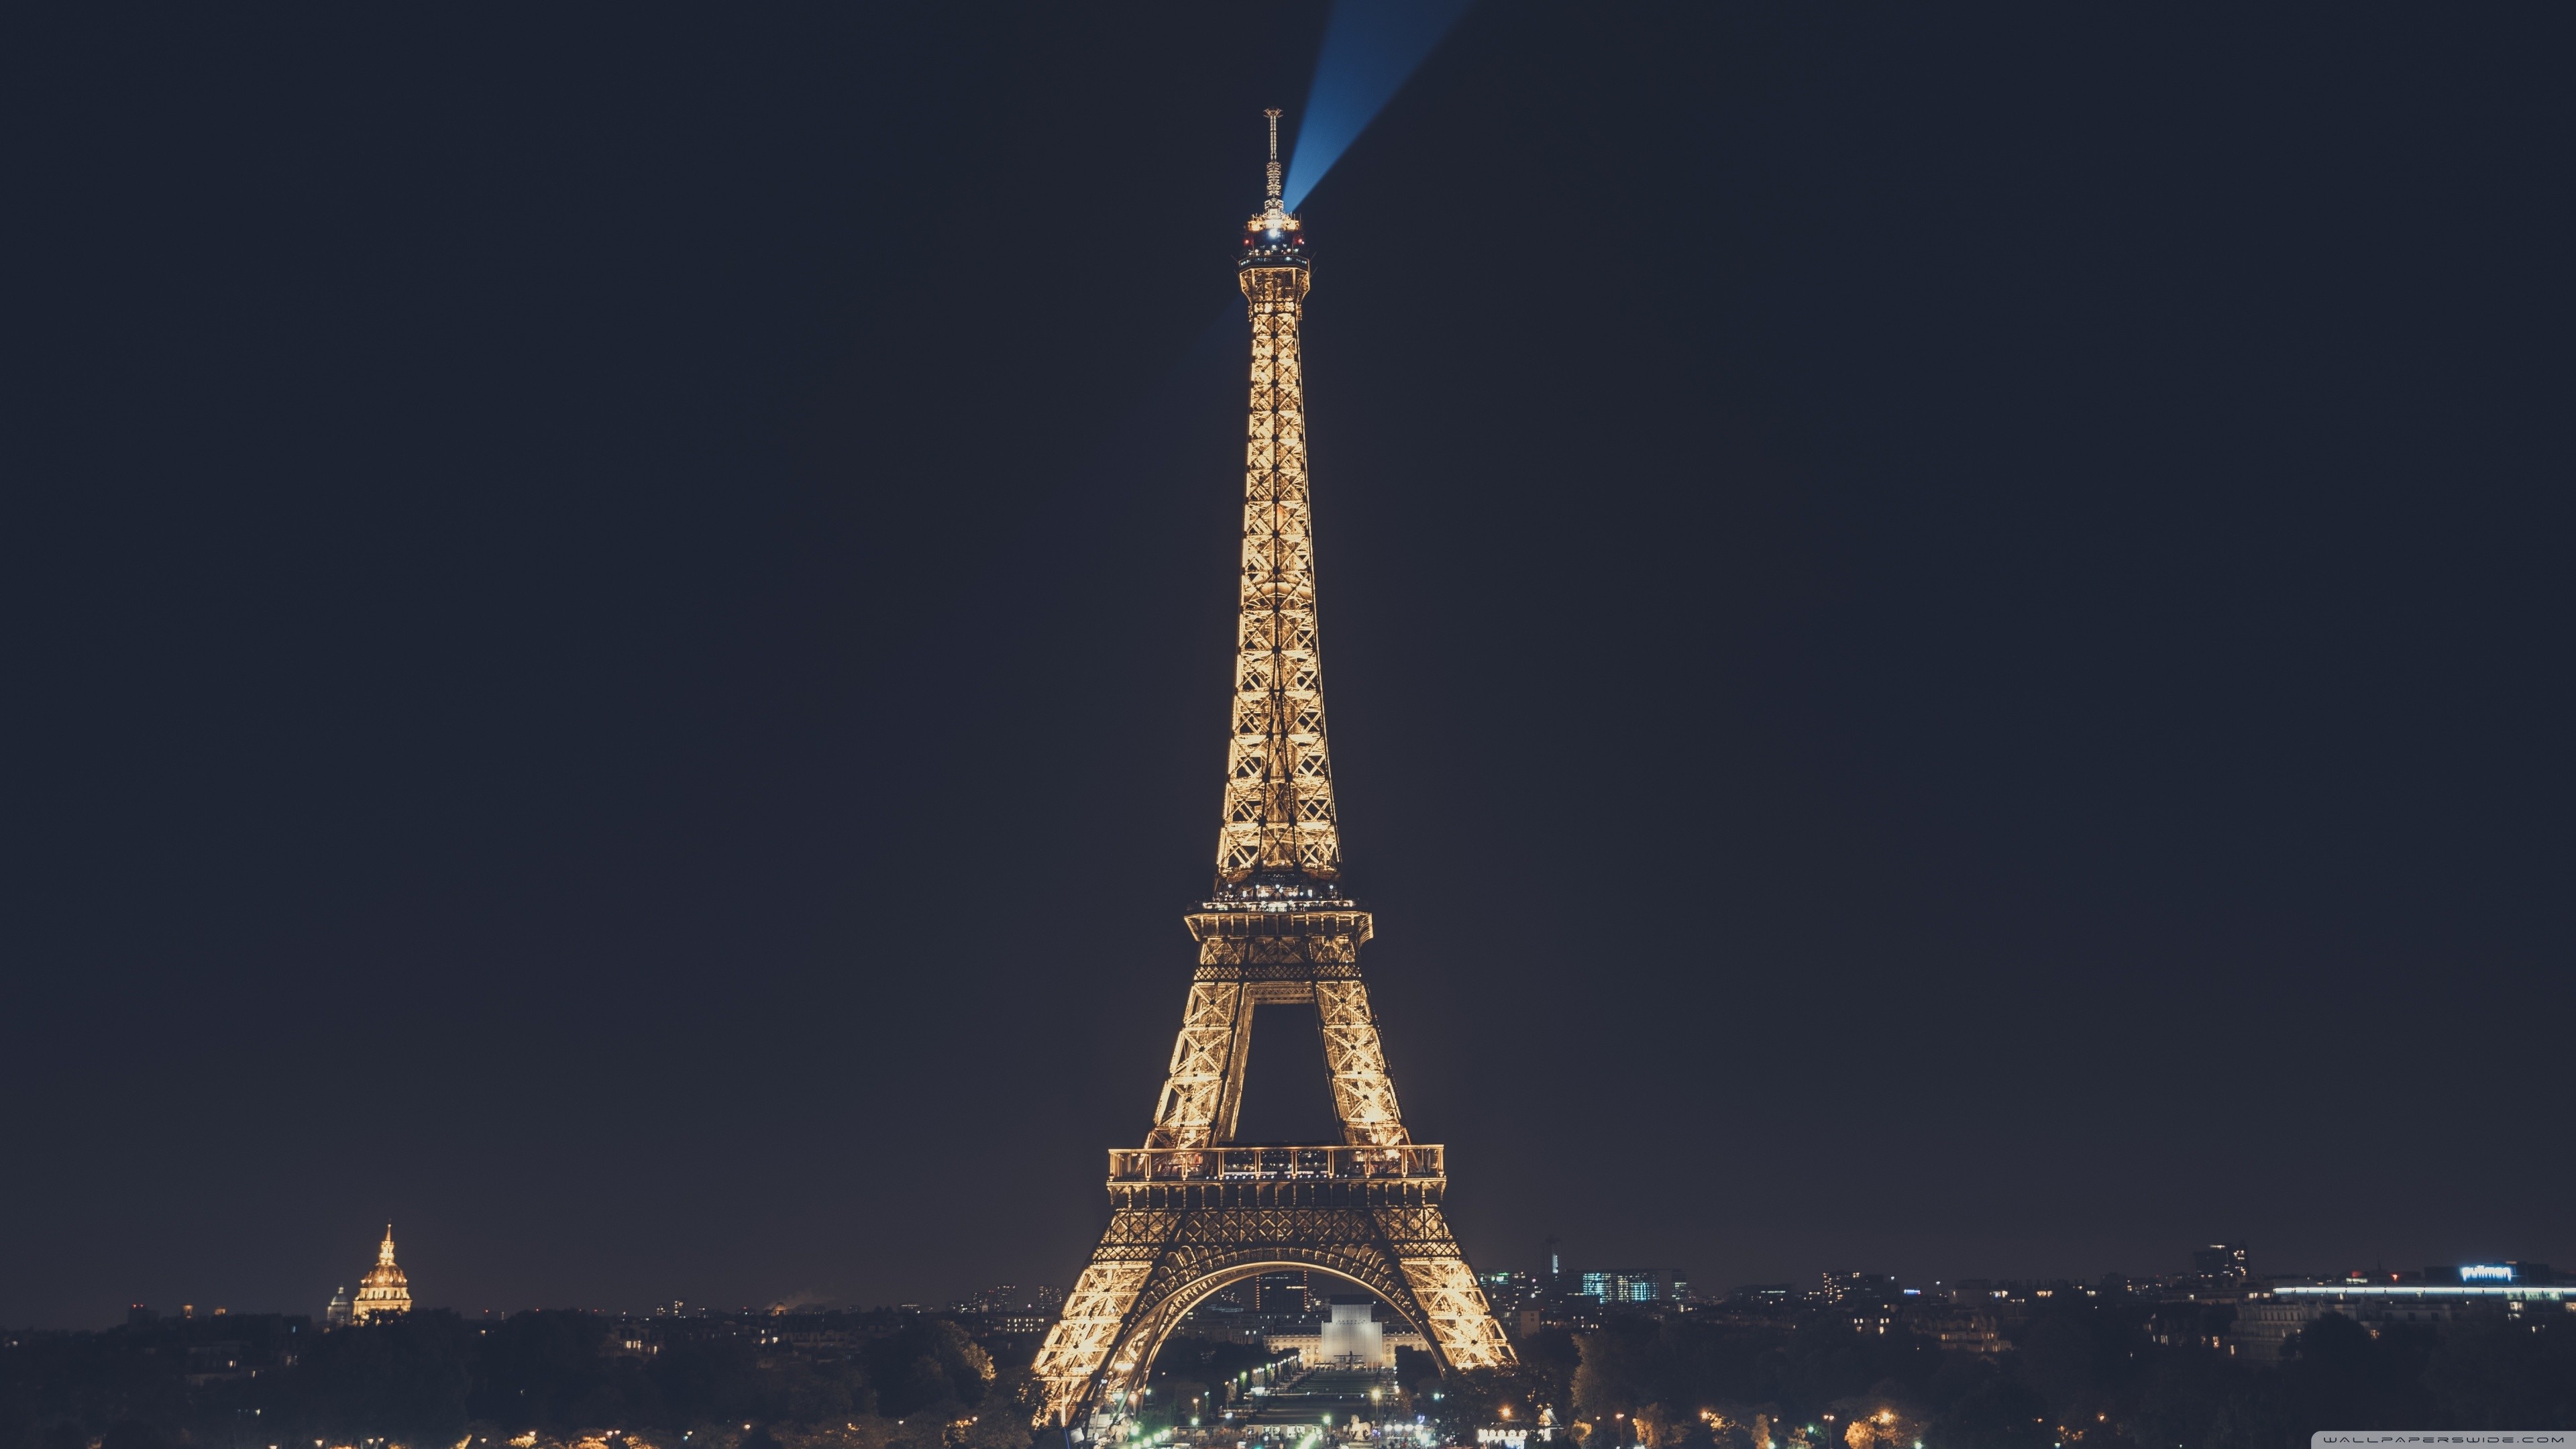 … eiffel tower at night paris france hd desktop wallpaper …